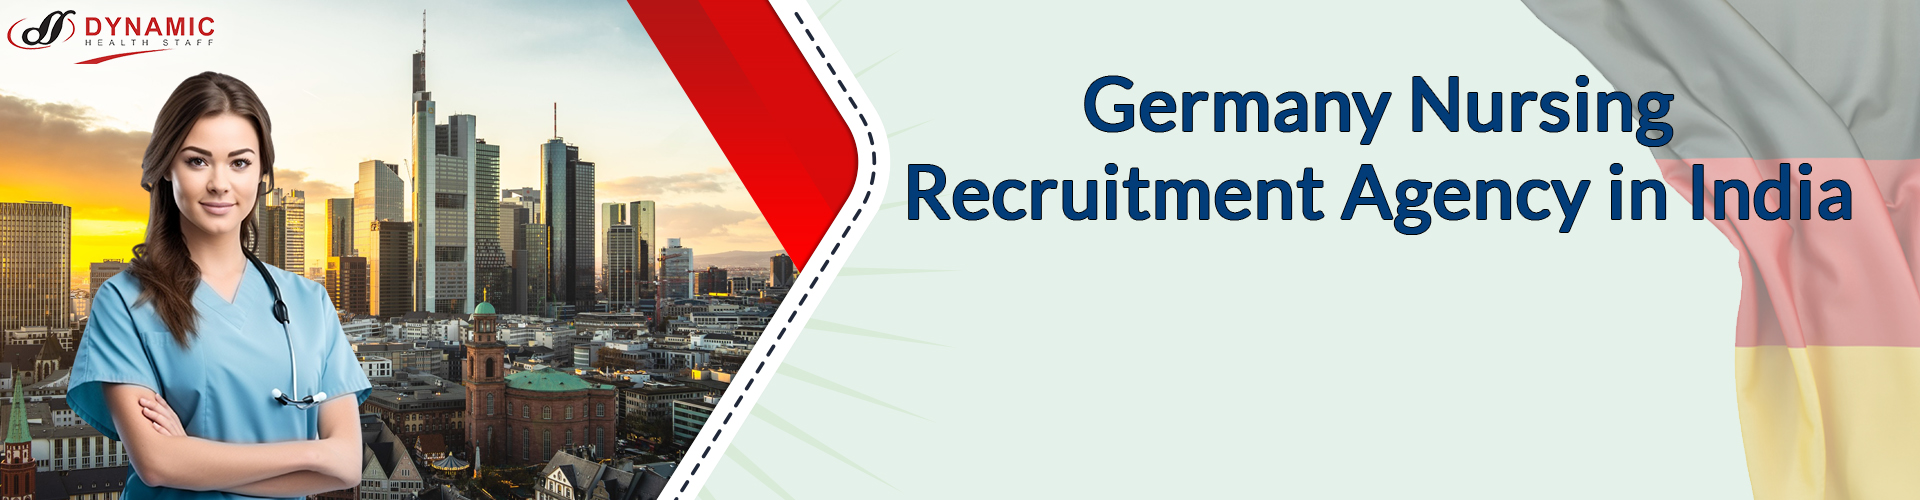 Germany Nursing Recruitment Agency in India